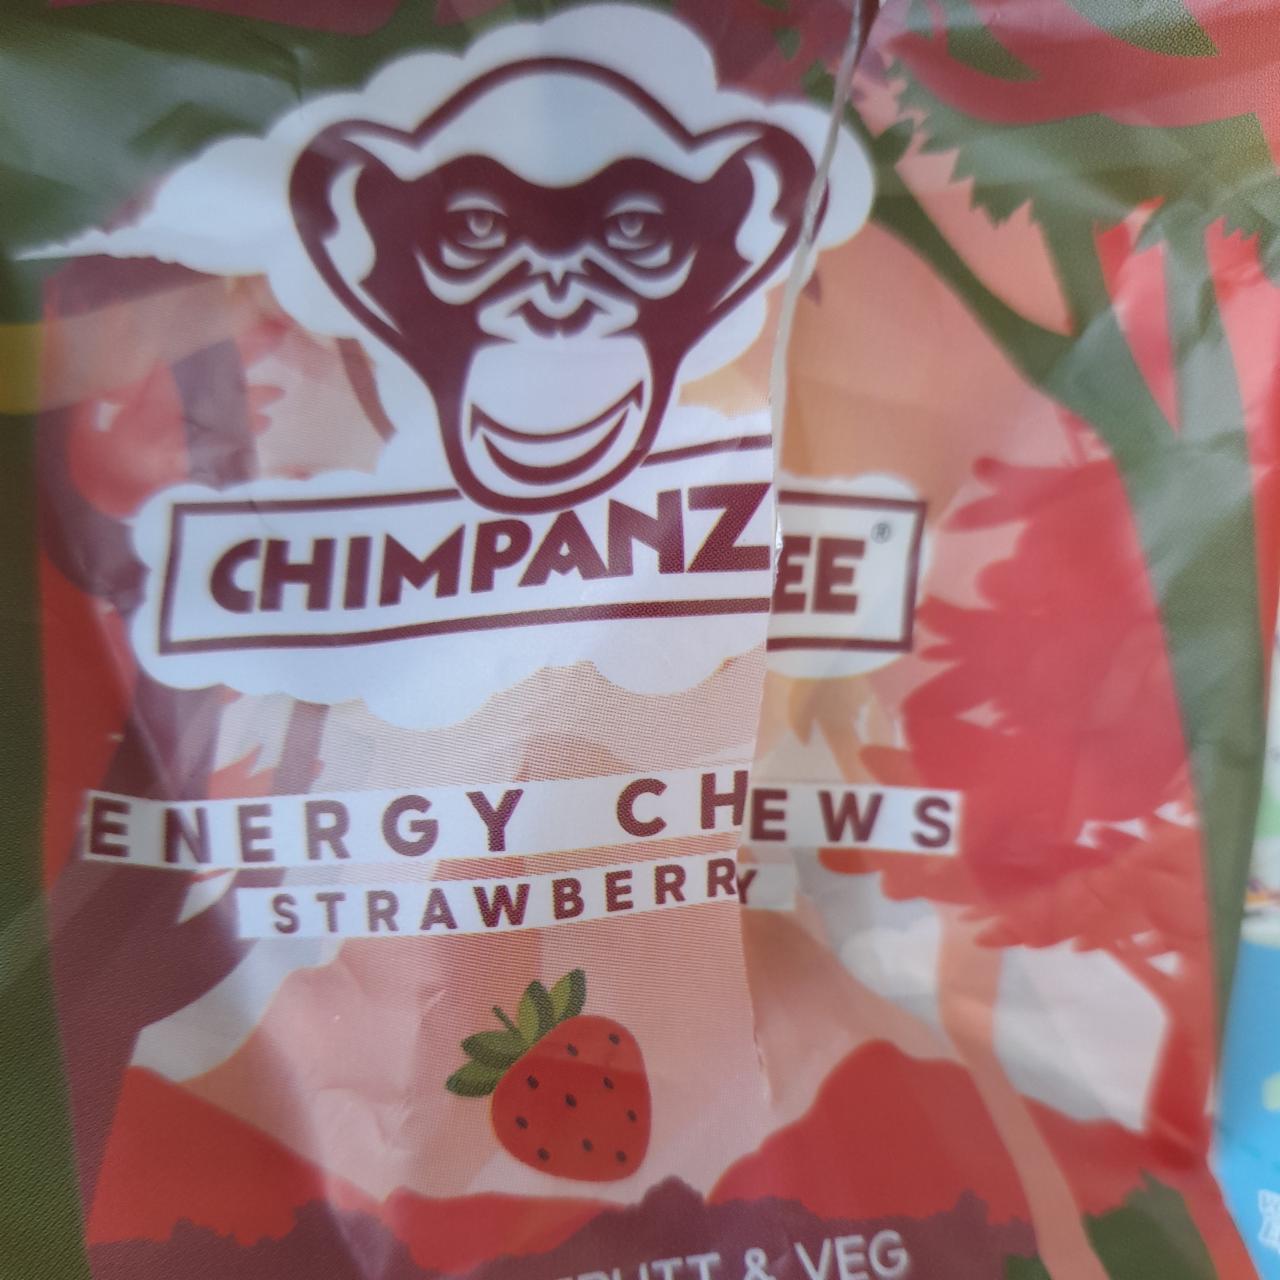 Fotografie - Energy Chews Strawberry Chimpanzee